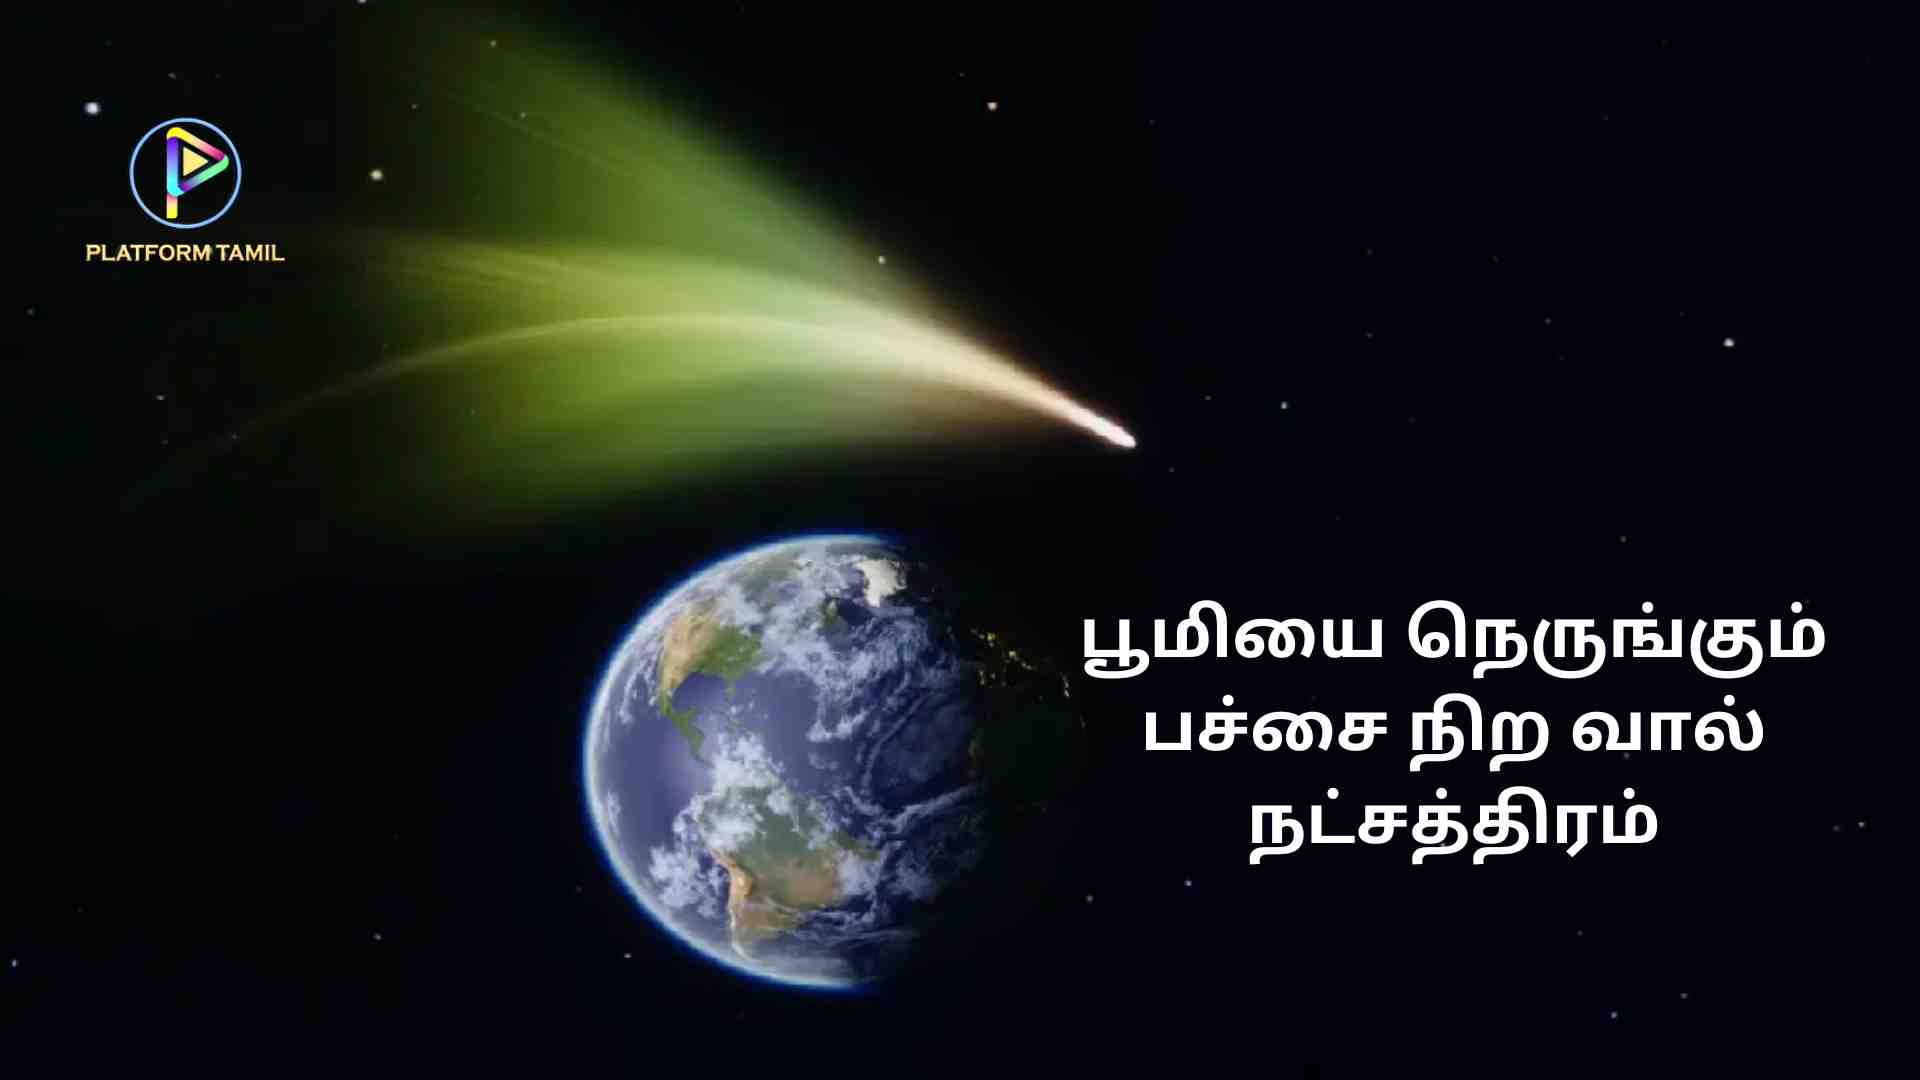 Green Comet in Sky - Platform Tamil